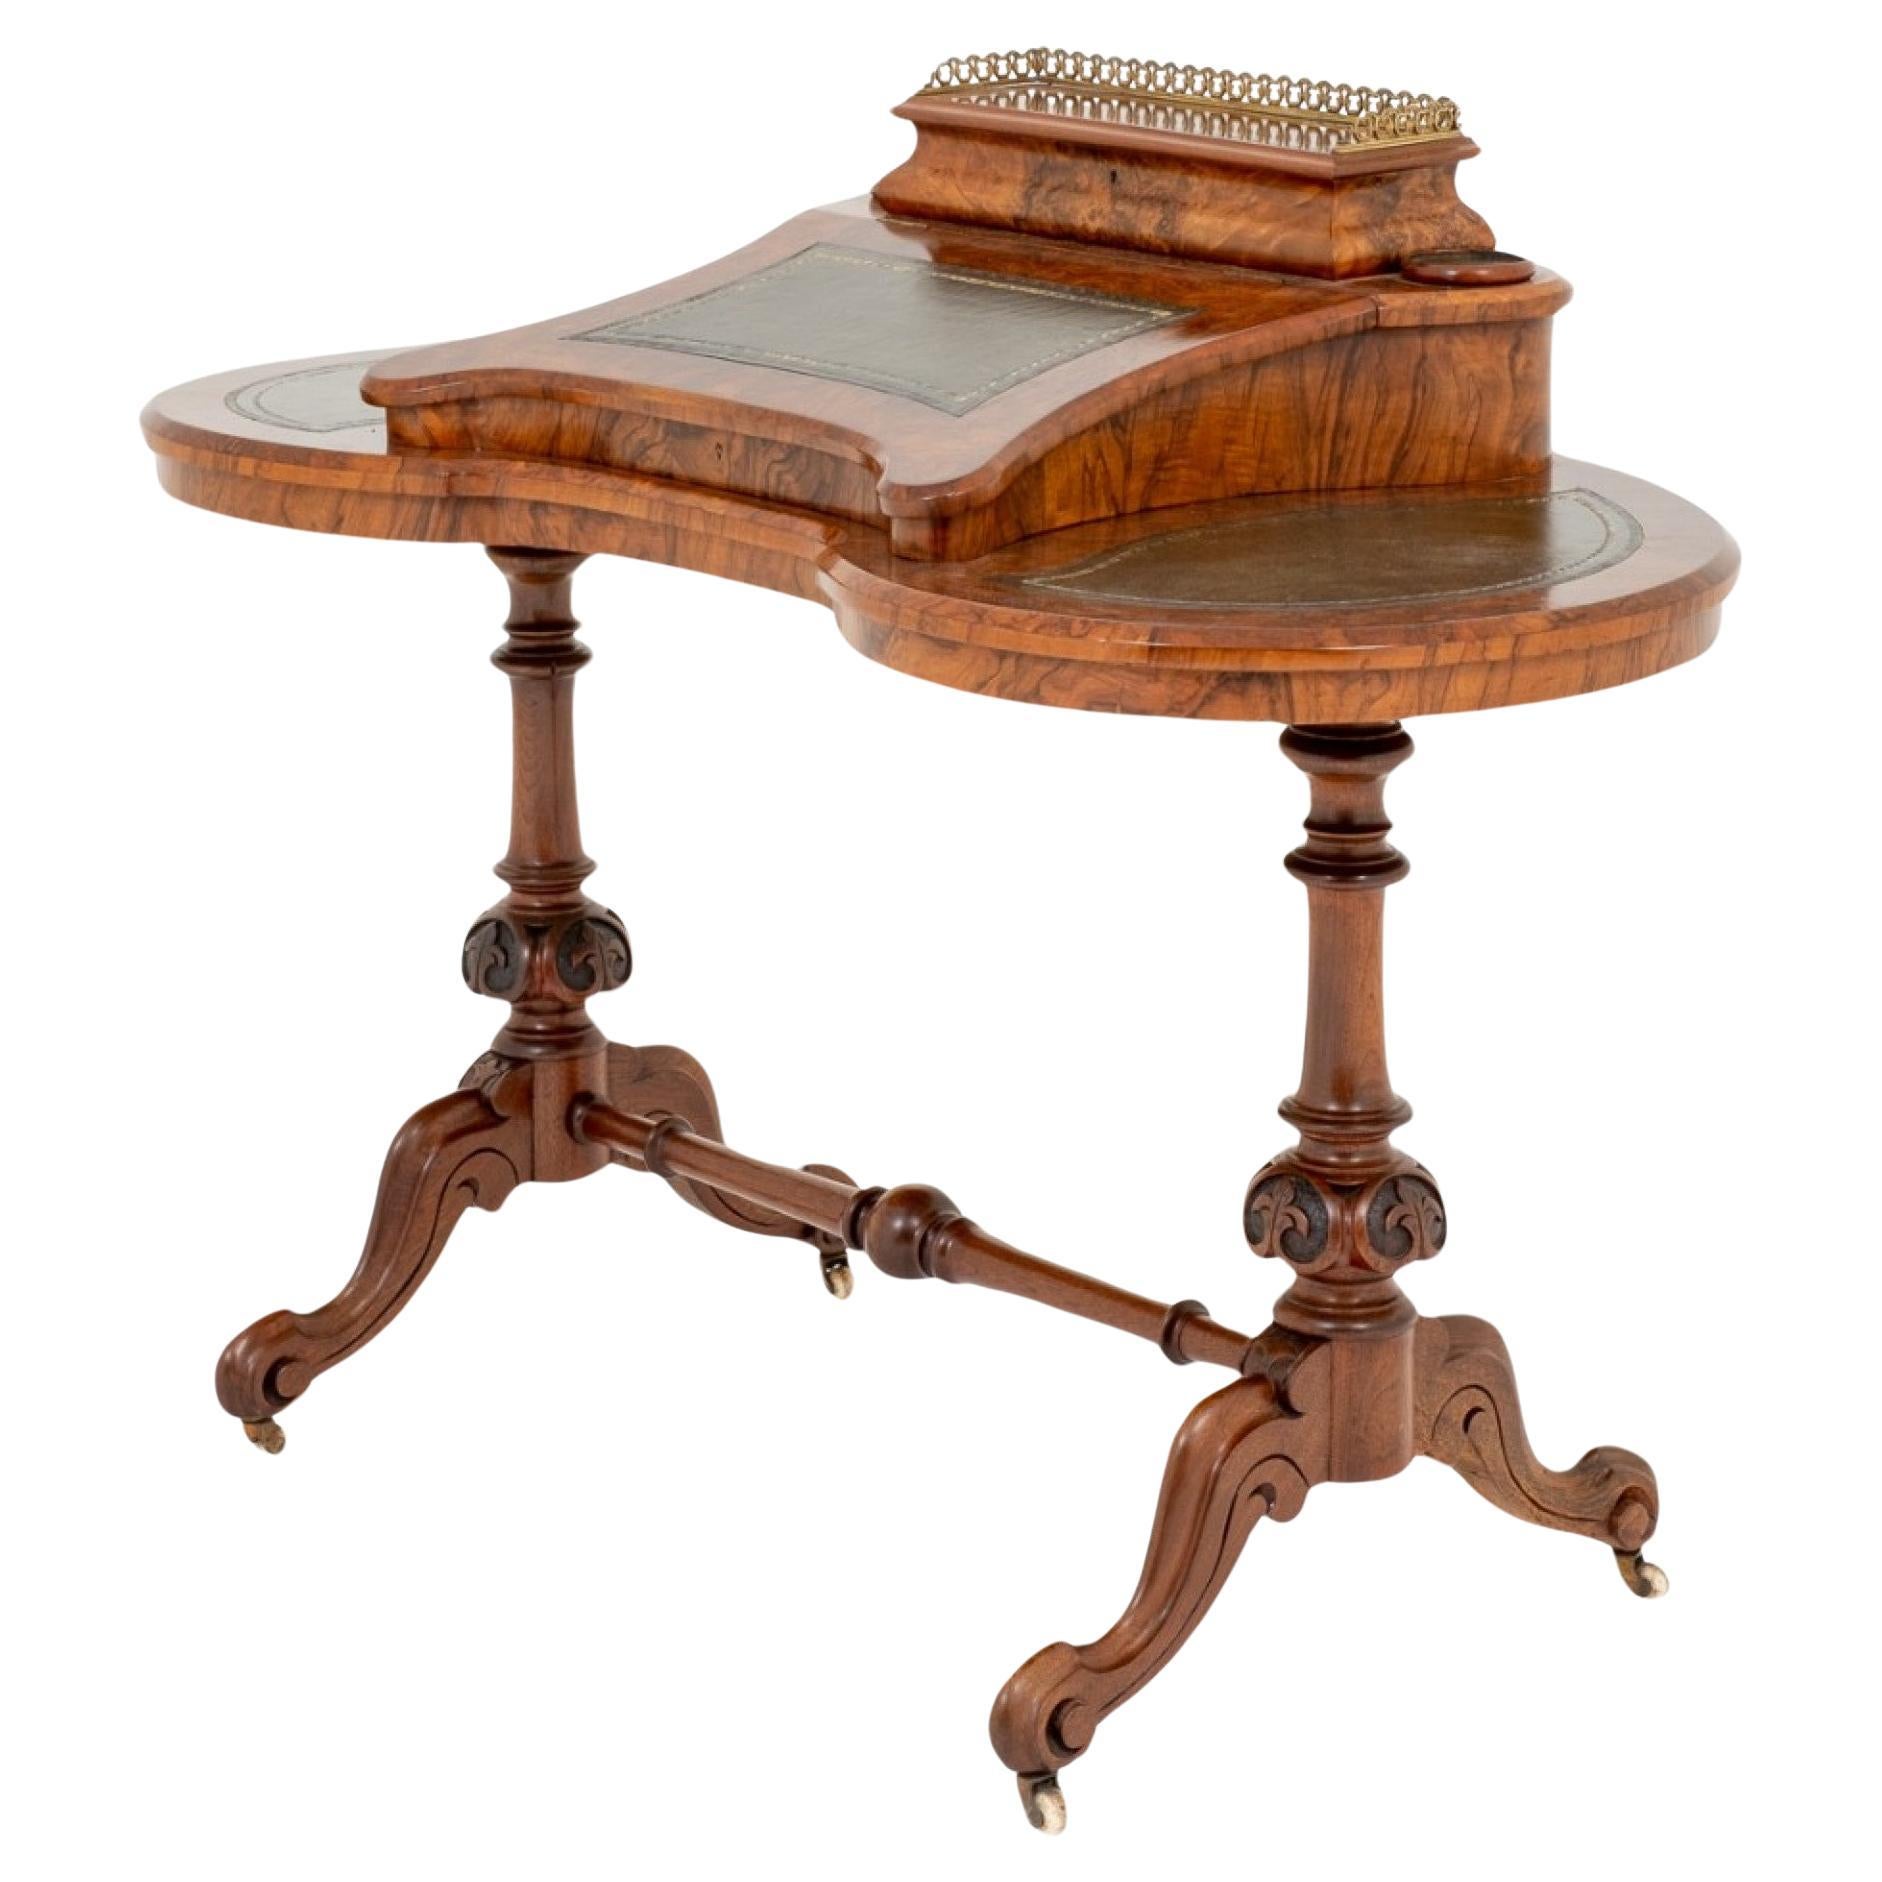 Victorian Desk - Walnut Shaped Writing Table Circa 1860